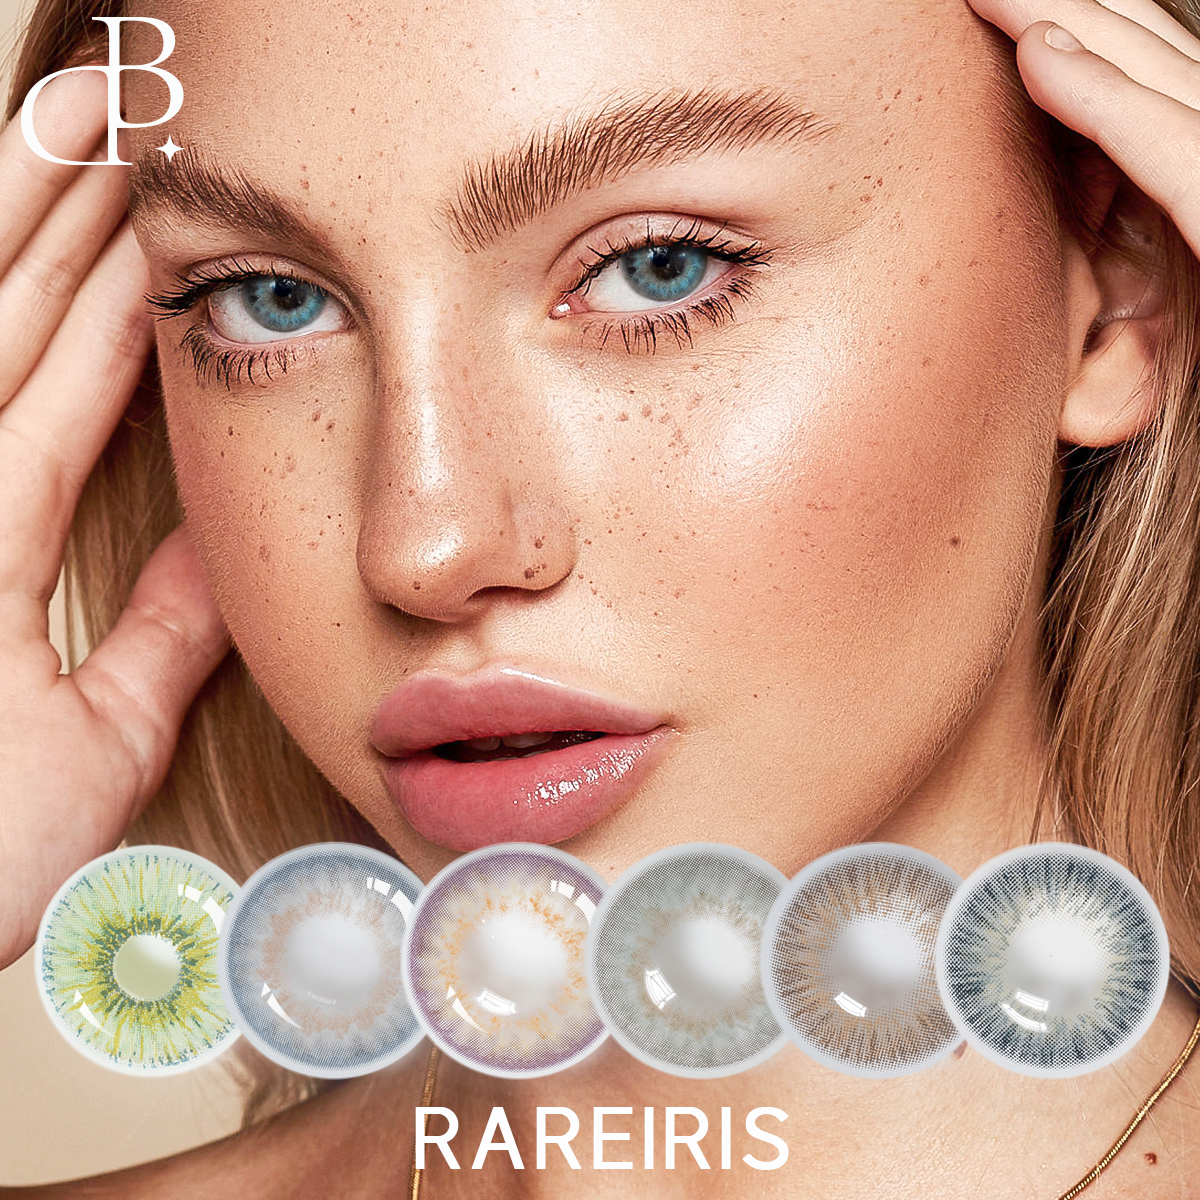 RAREIRIS myk kontaktlinse farget nærsynt linse Naturlig fargelinse tilpassede kontaktlinser